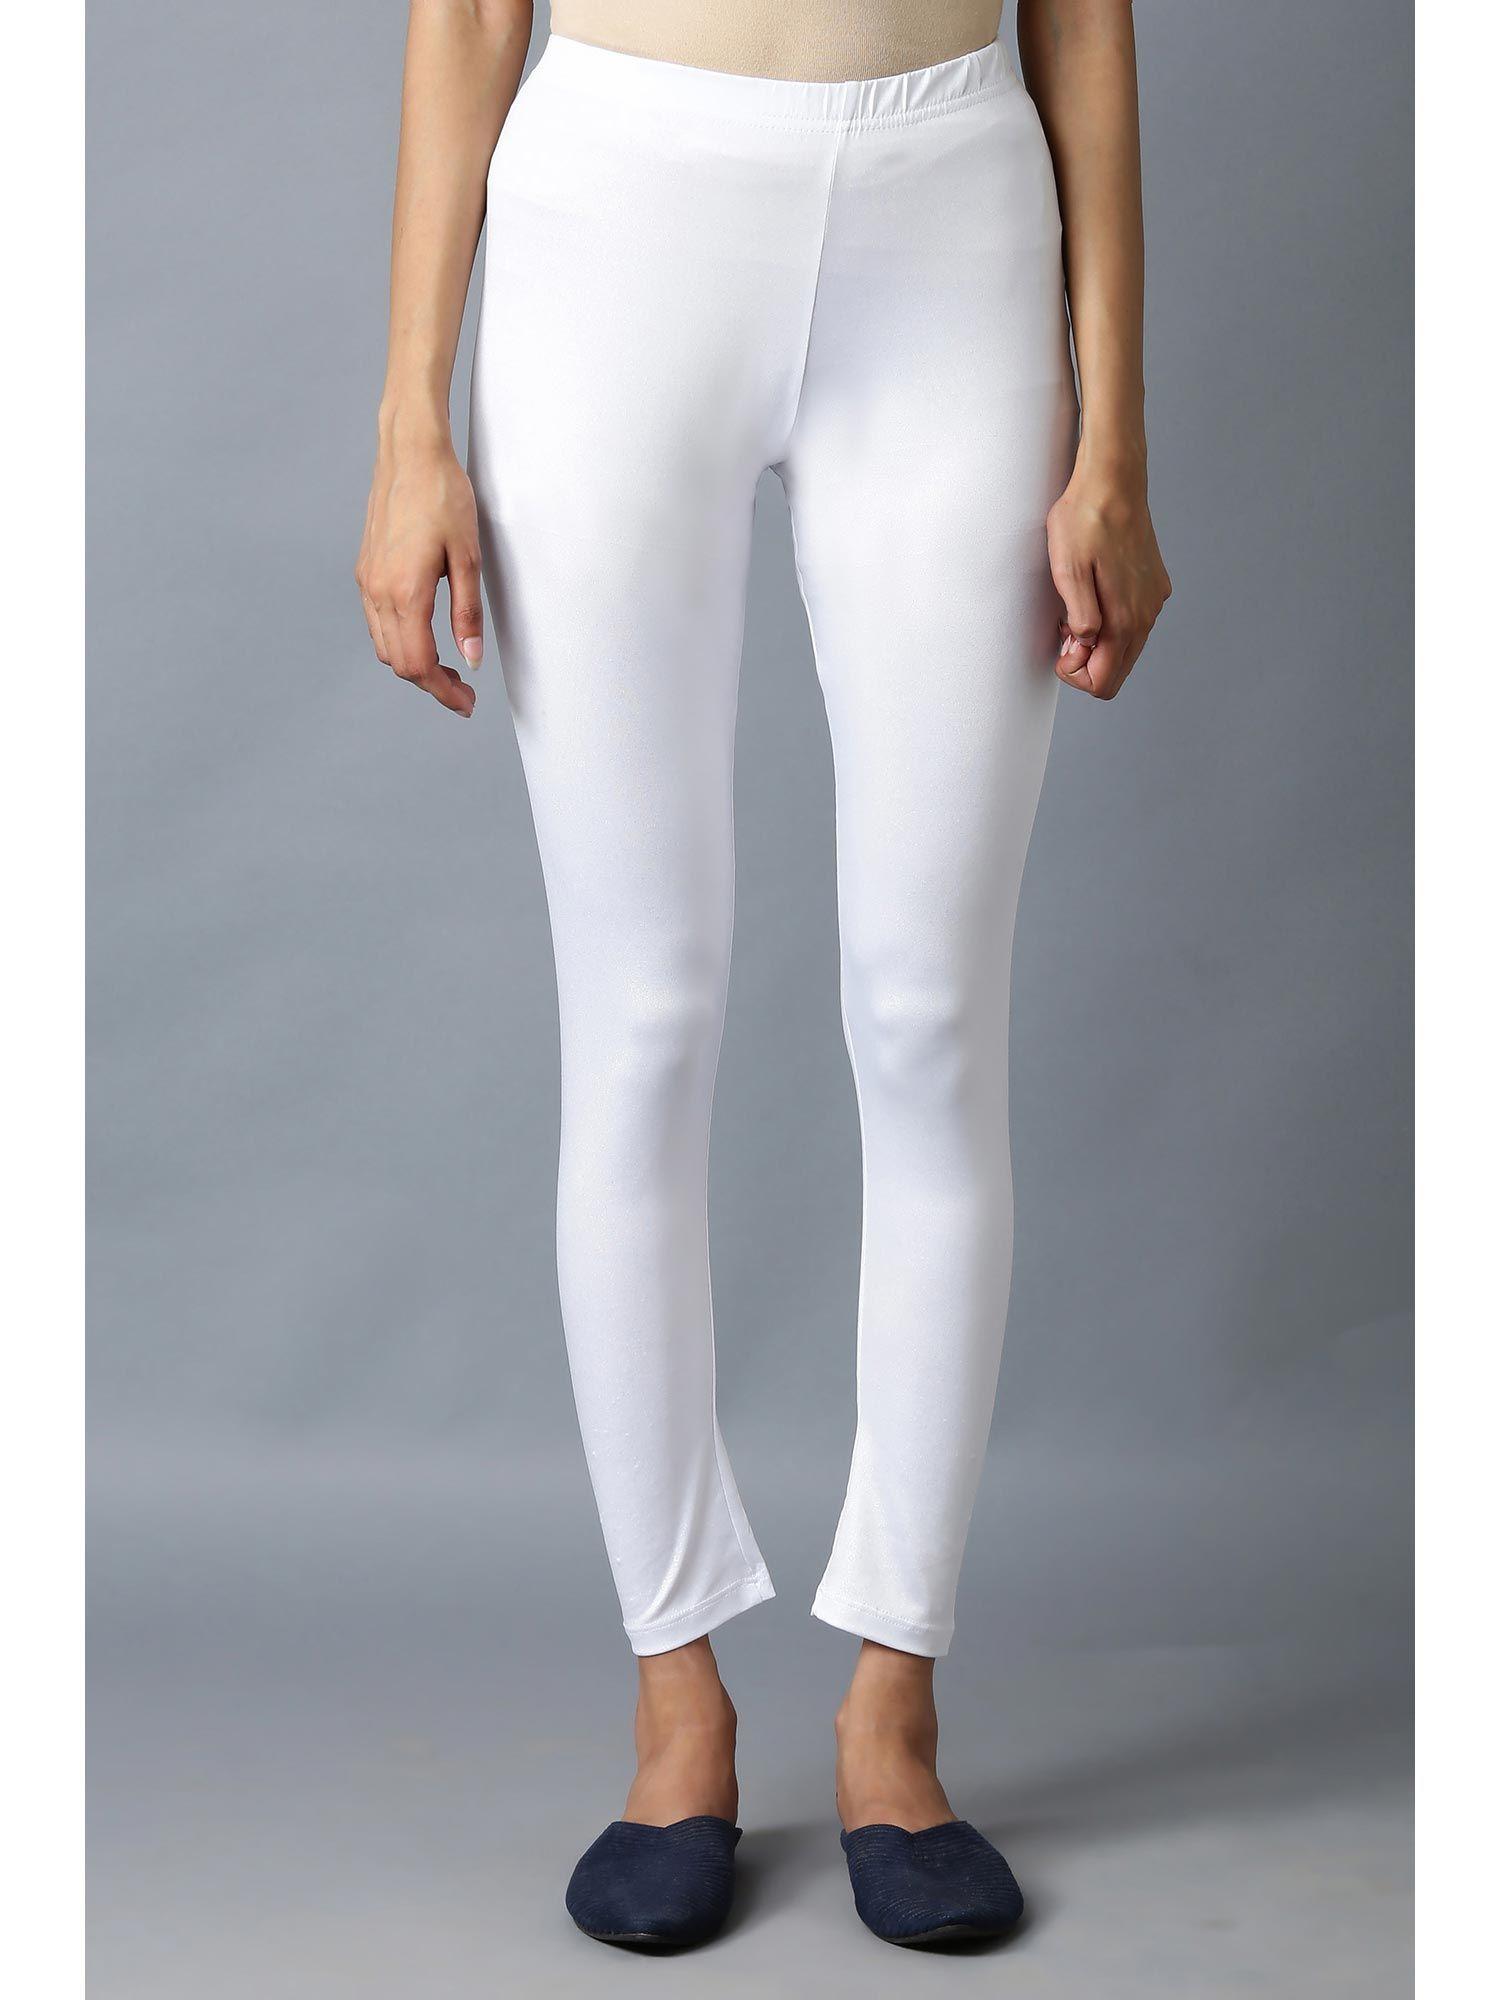 shimmer white snug fit tights